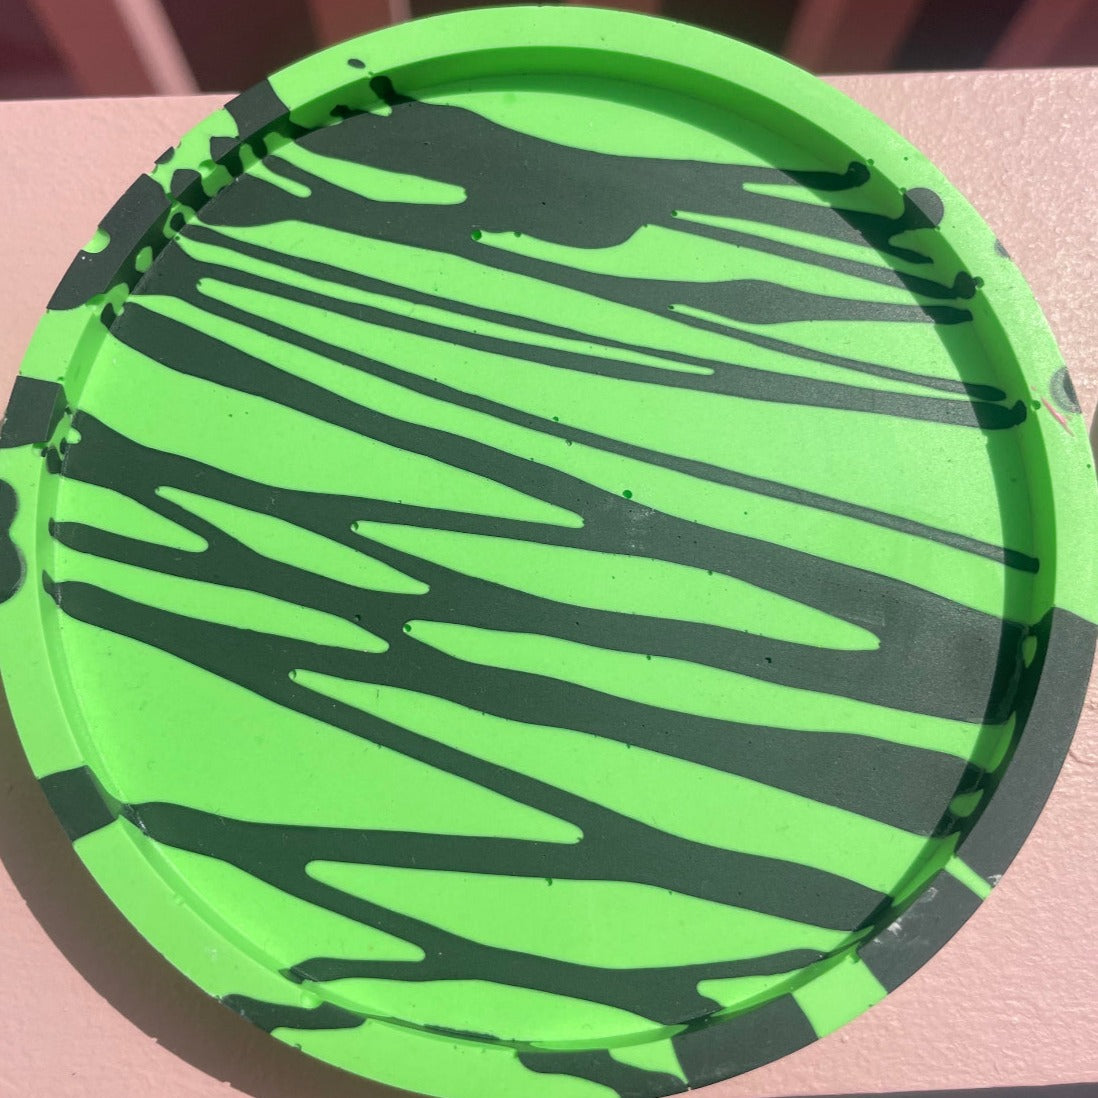 Coaster Set - Round - Graffiti - Green & Black